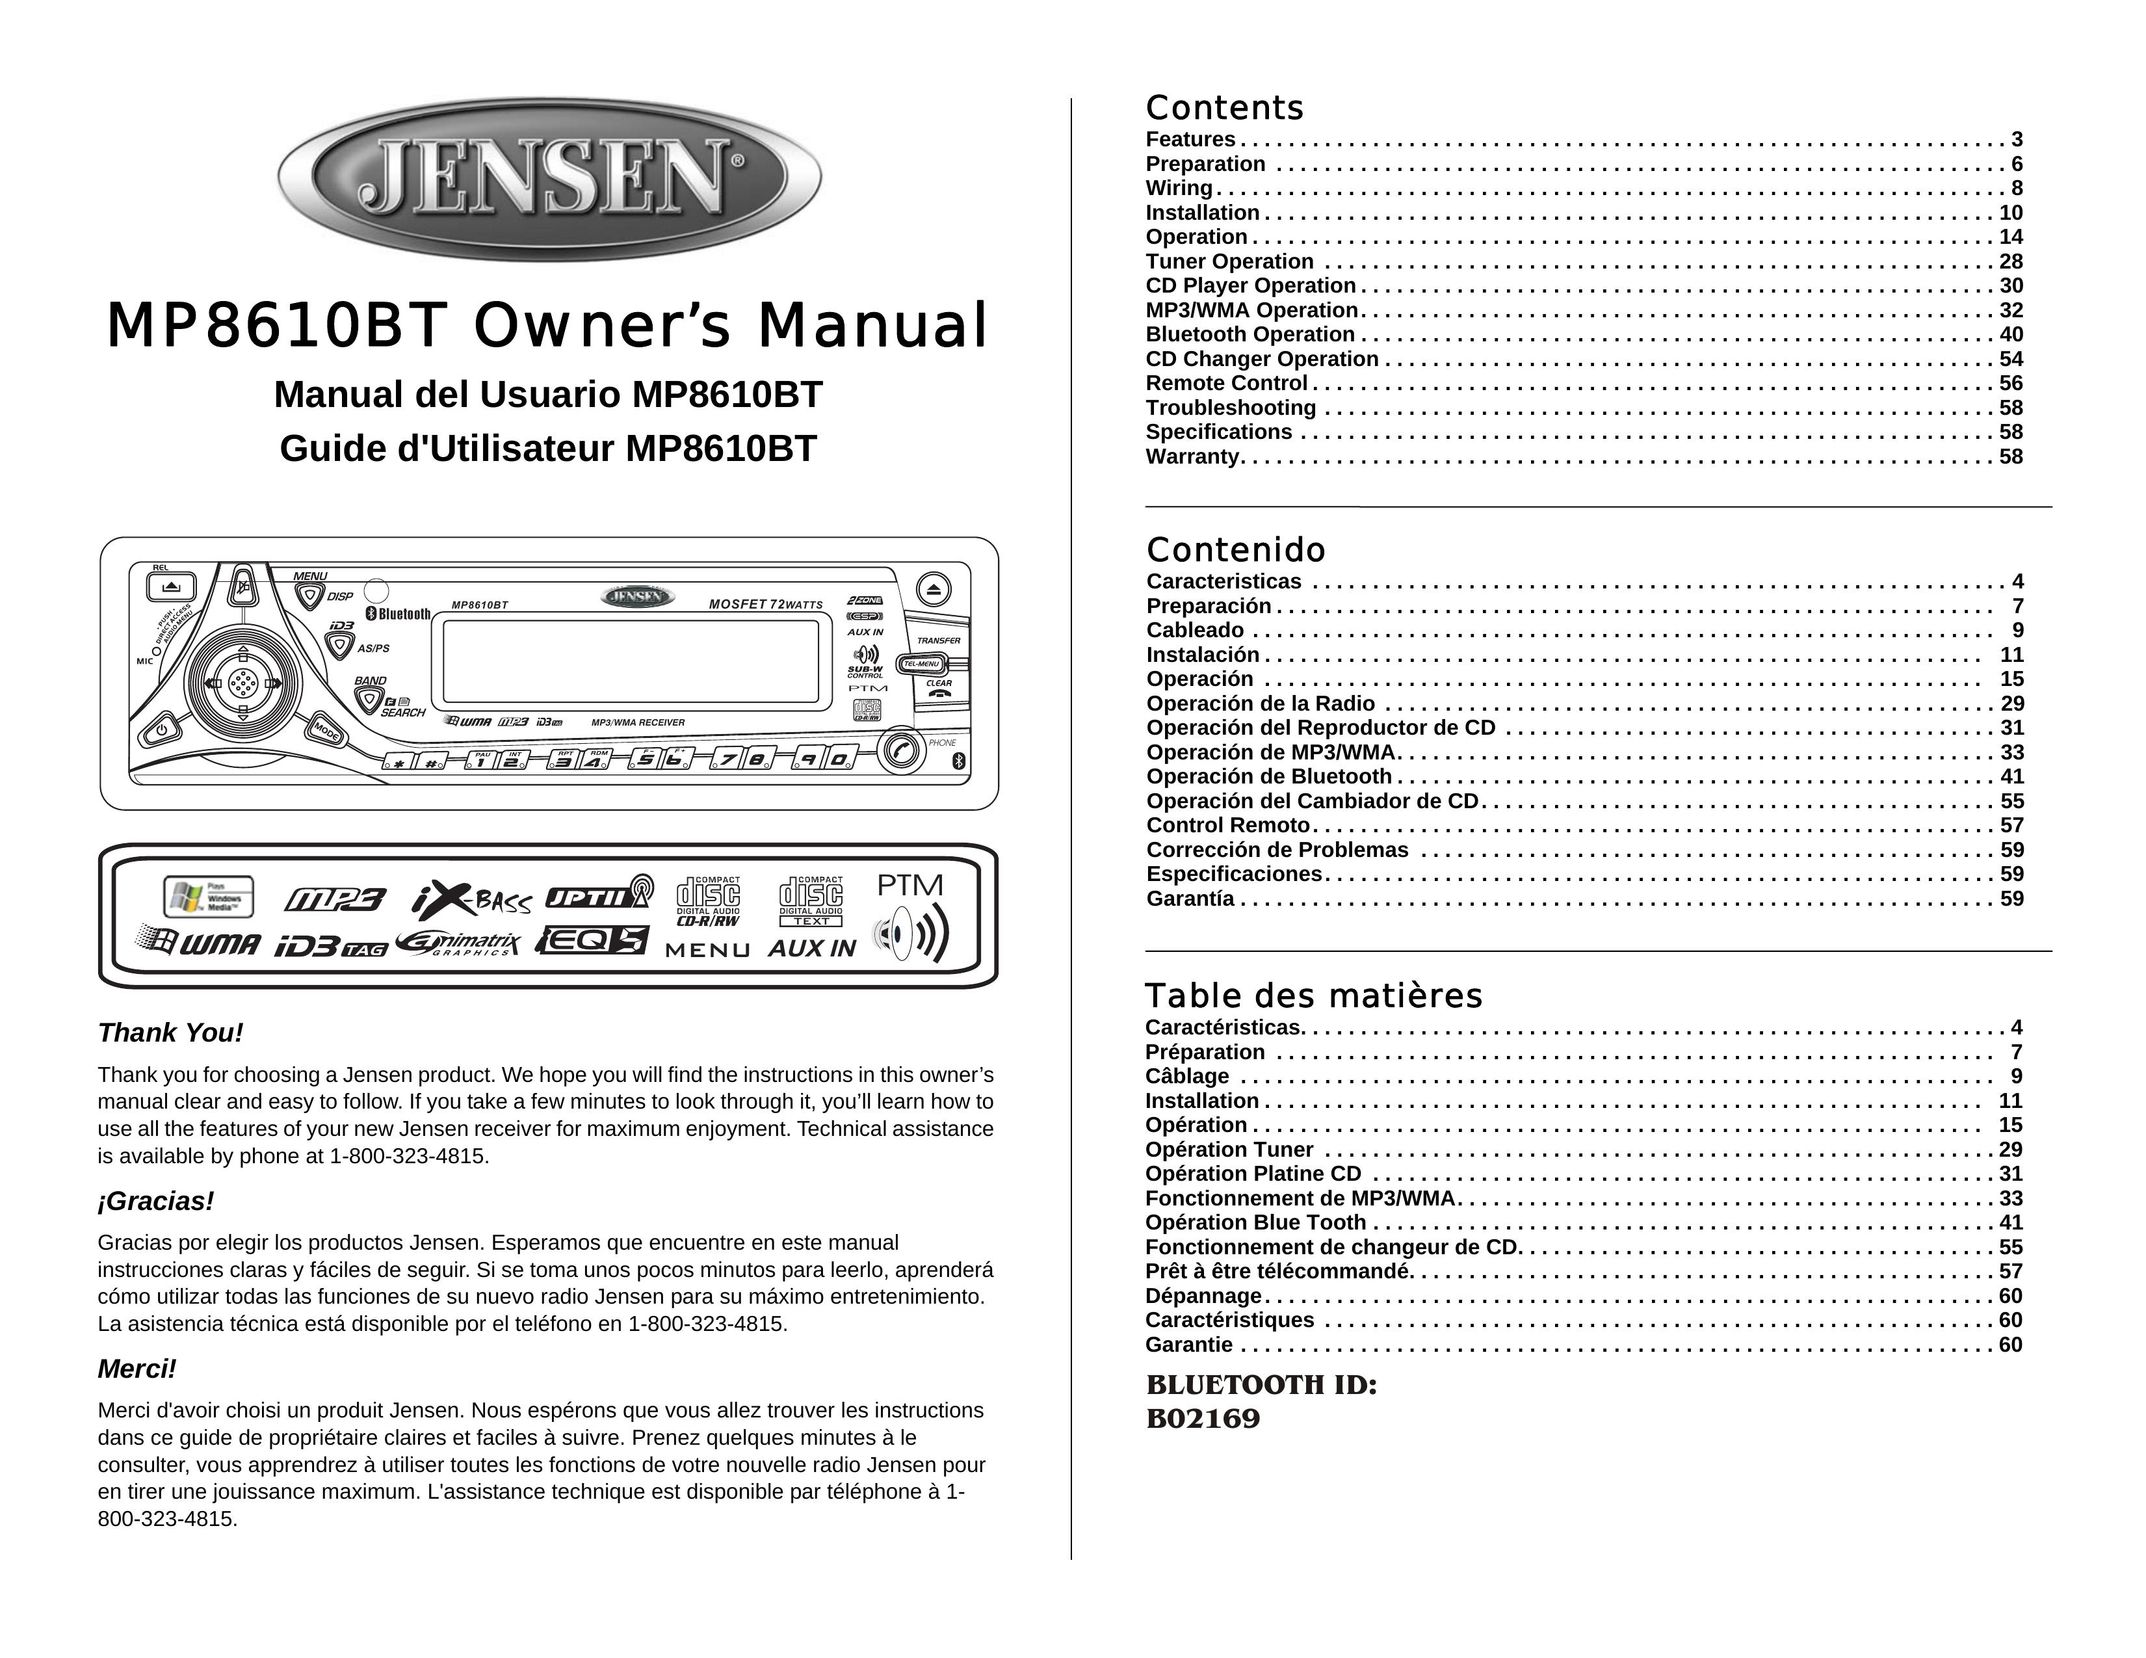 Jensen MP8610BT Car Stereo System User Manual